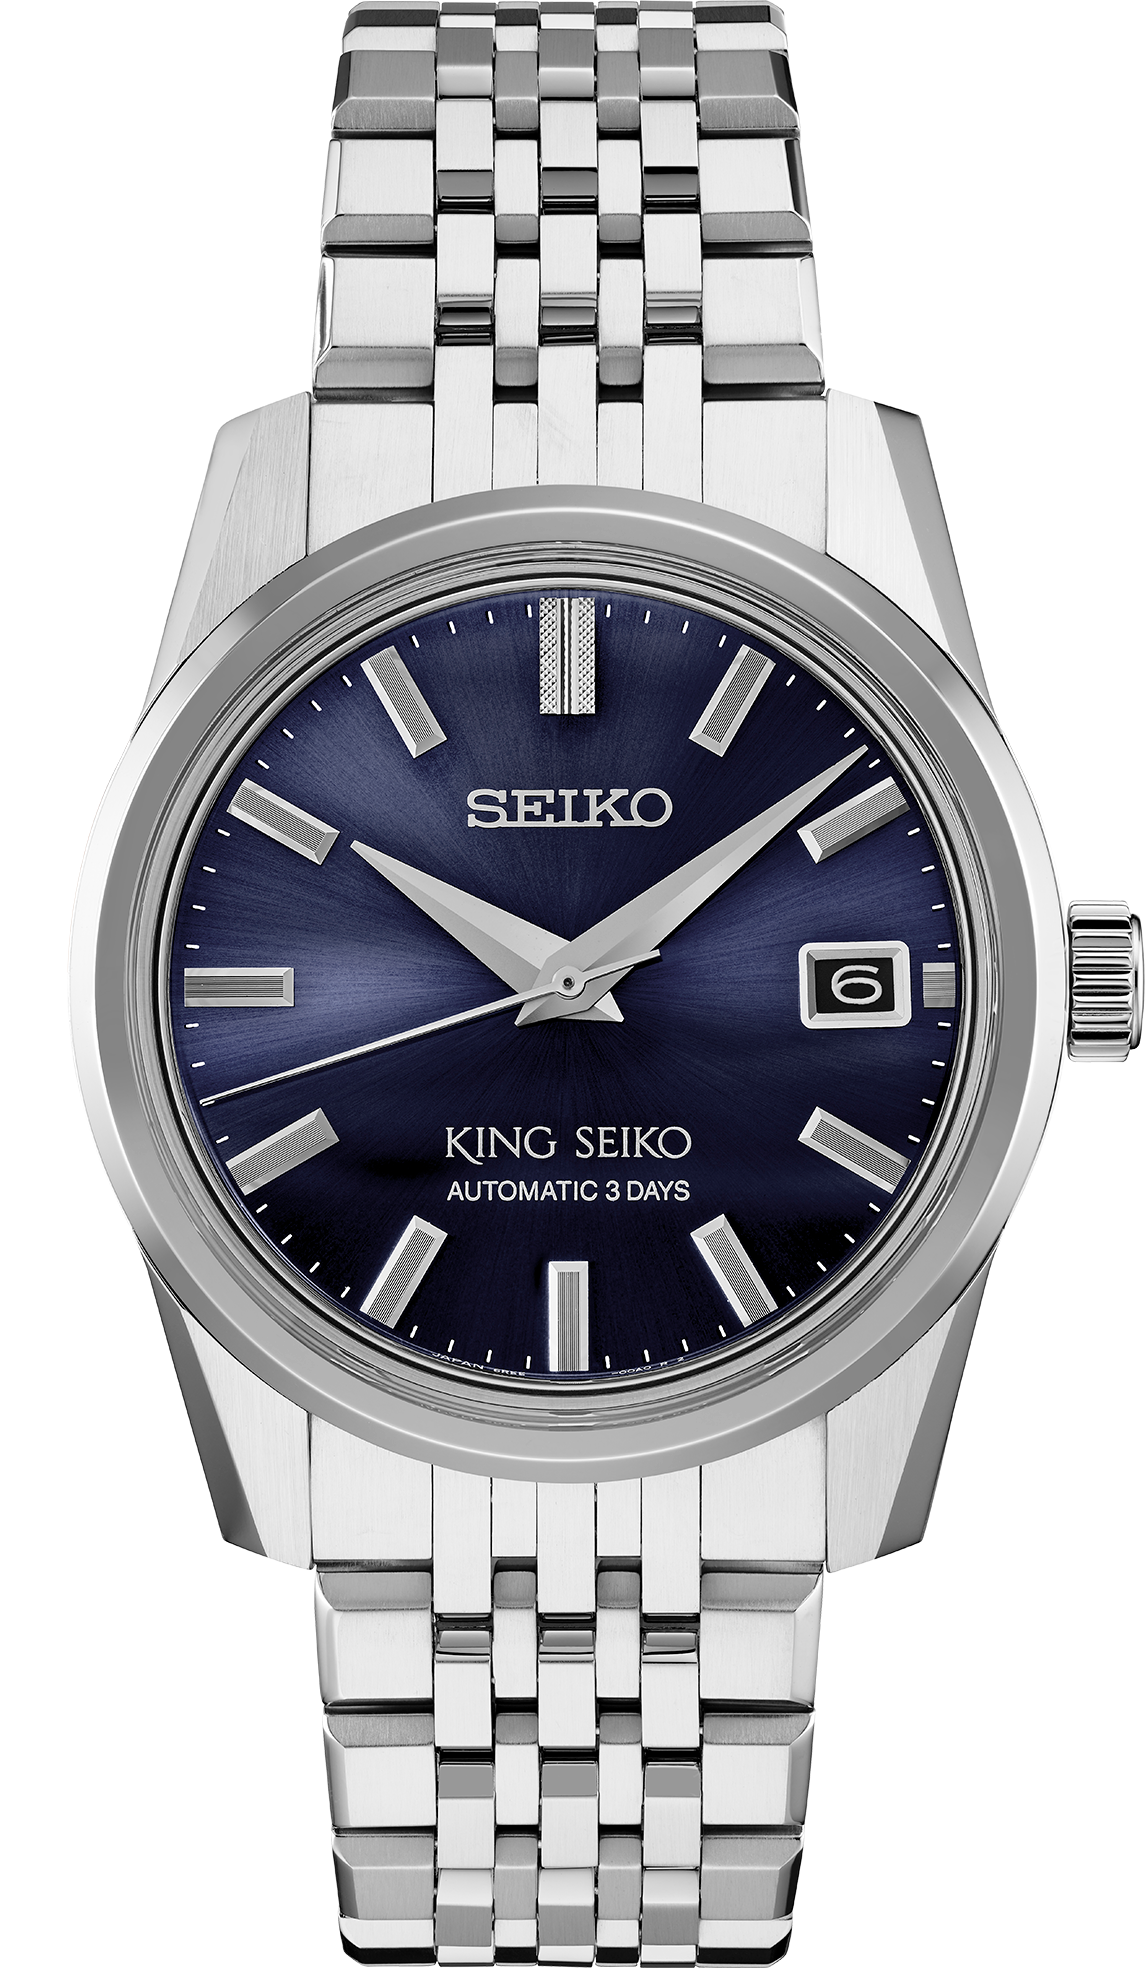 SPB371 Blue dial stainless steel King Seiko front solder shot